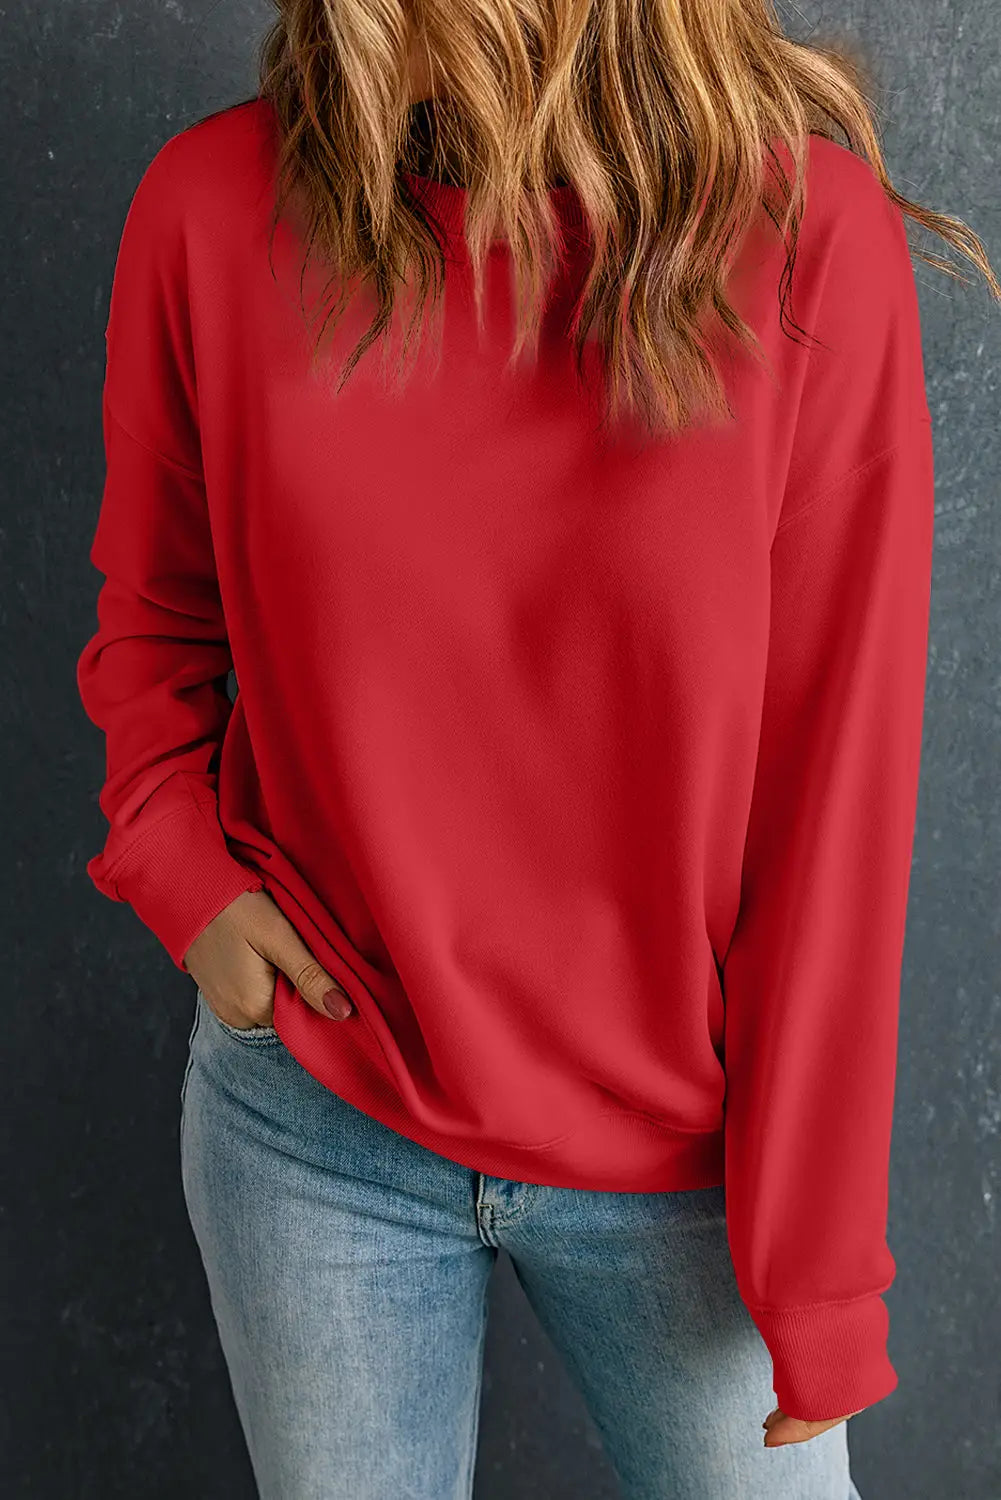 Beige solid classic crewneck pullover sweatshirt - red / s 50% polyester + 50% cotton sweatshirts & hoodies